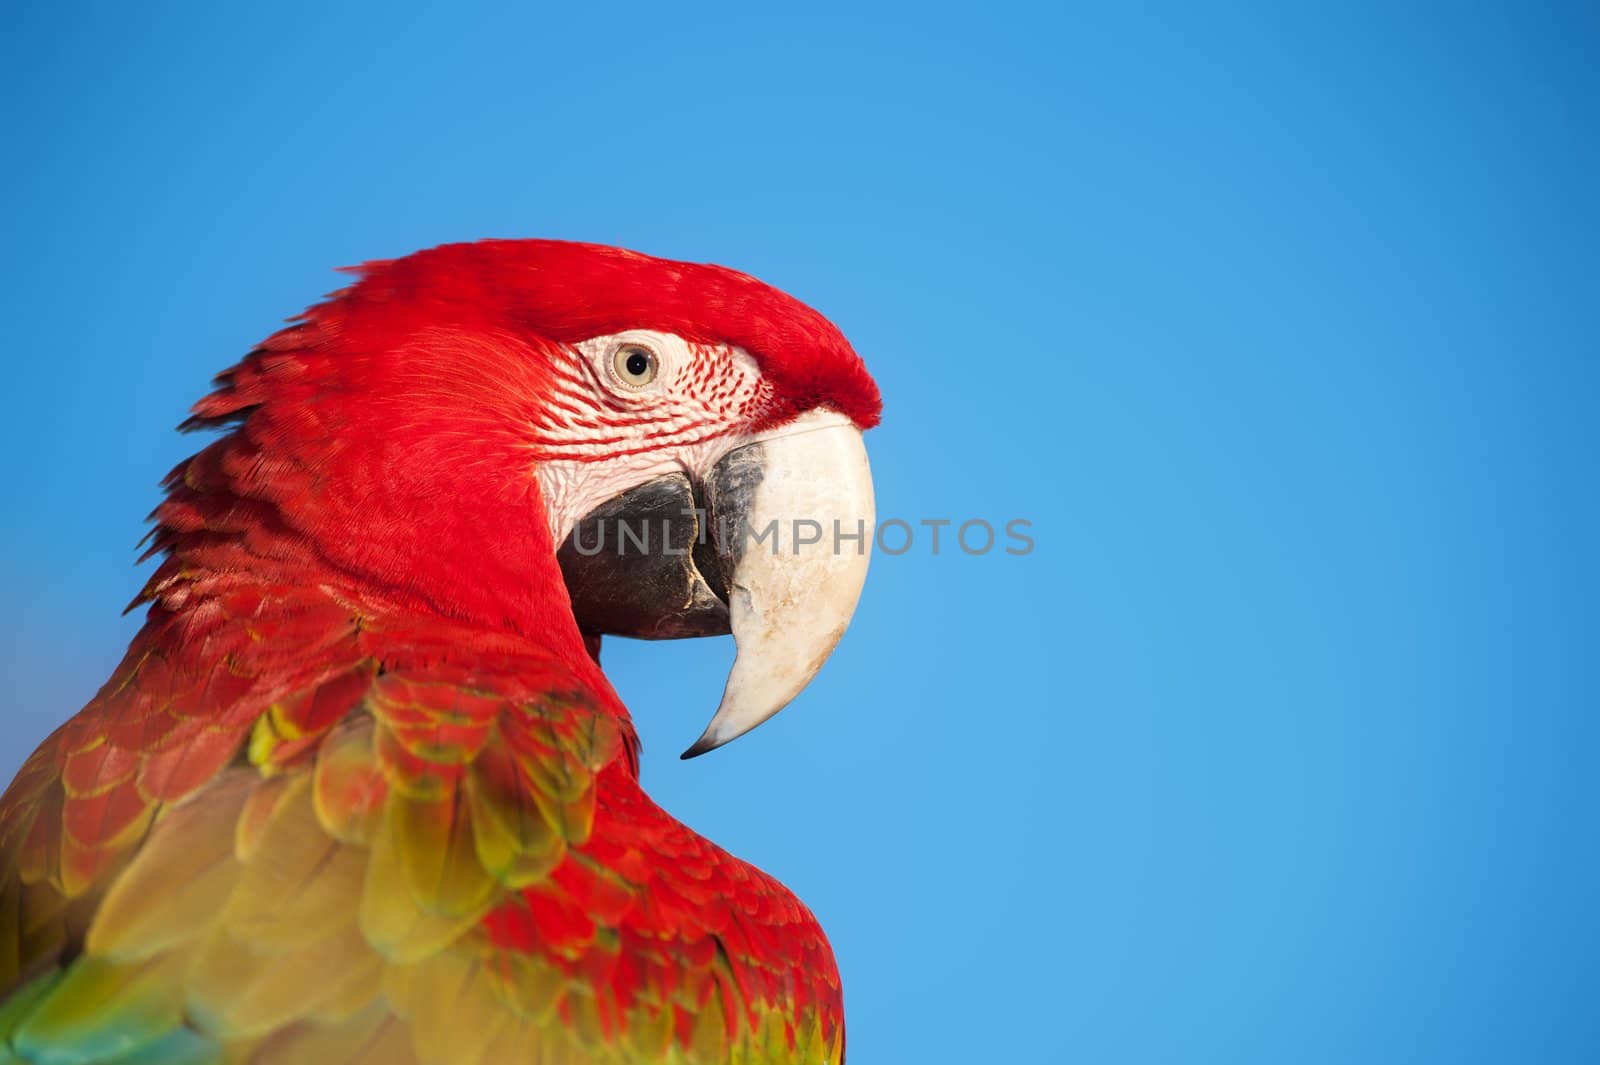 Macaw portrait with copy space.